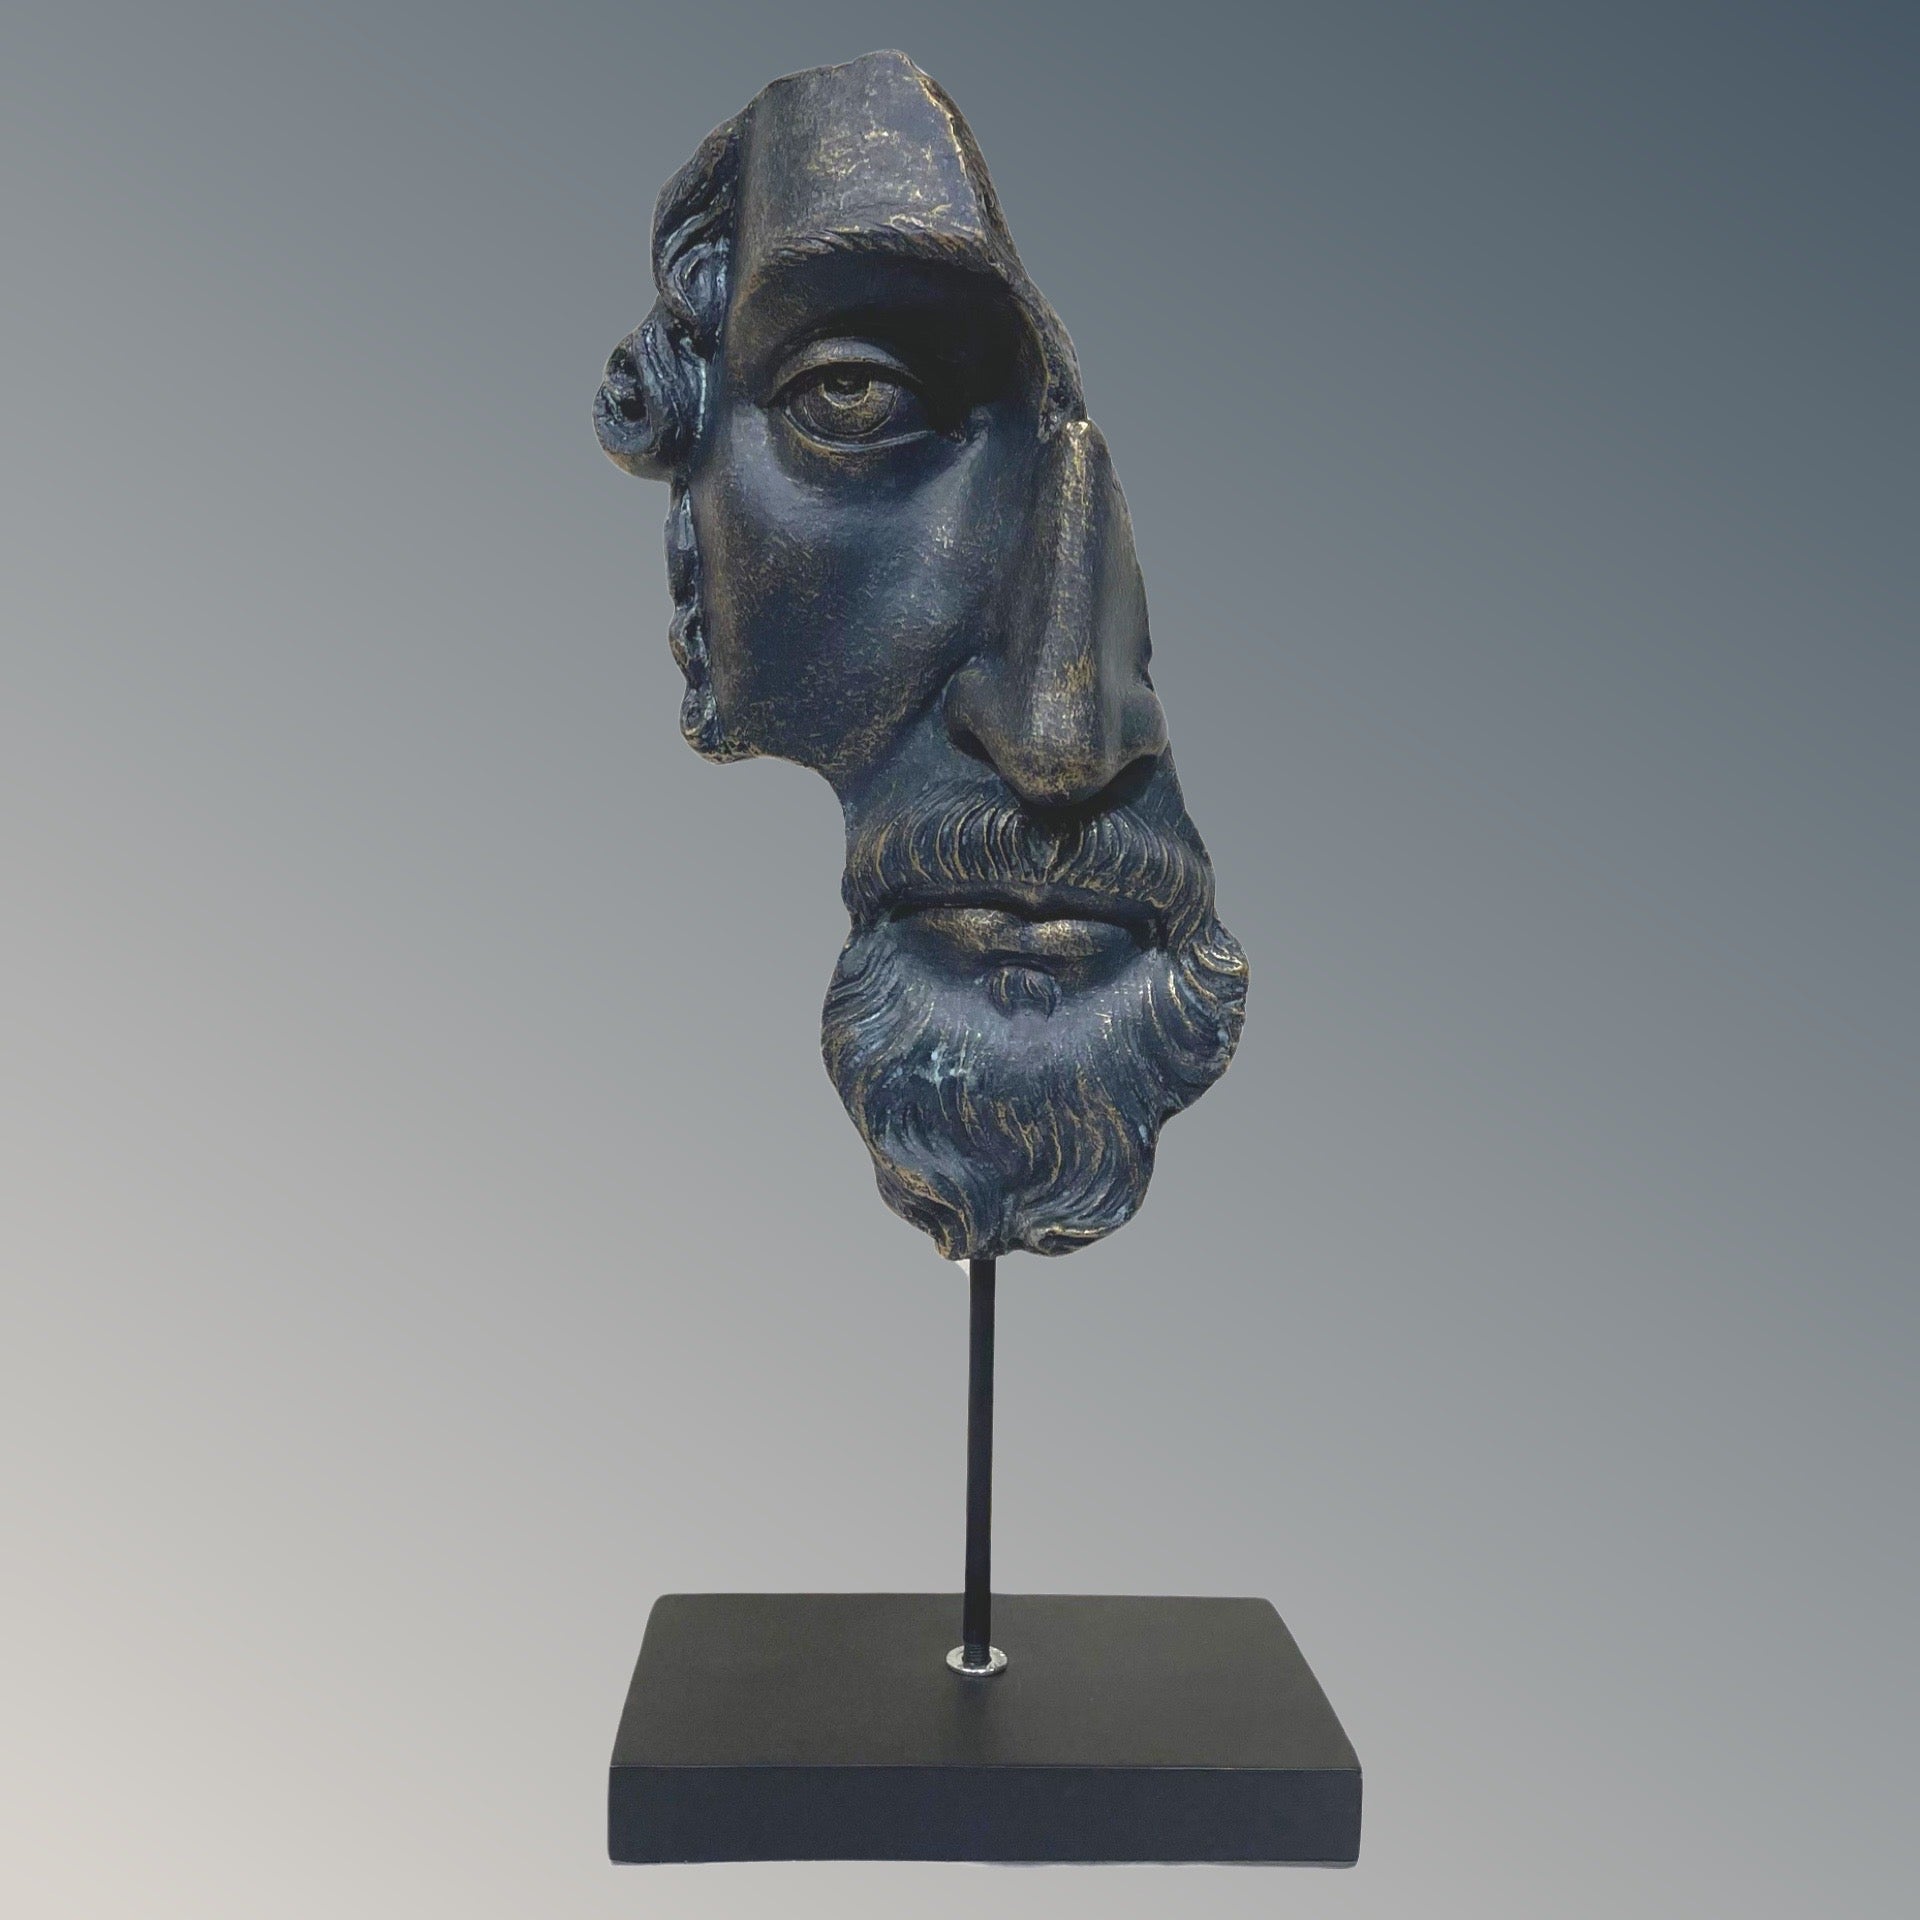 Figurine - The Grey Greek Face